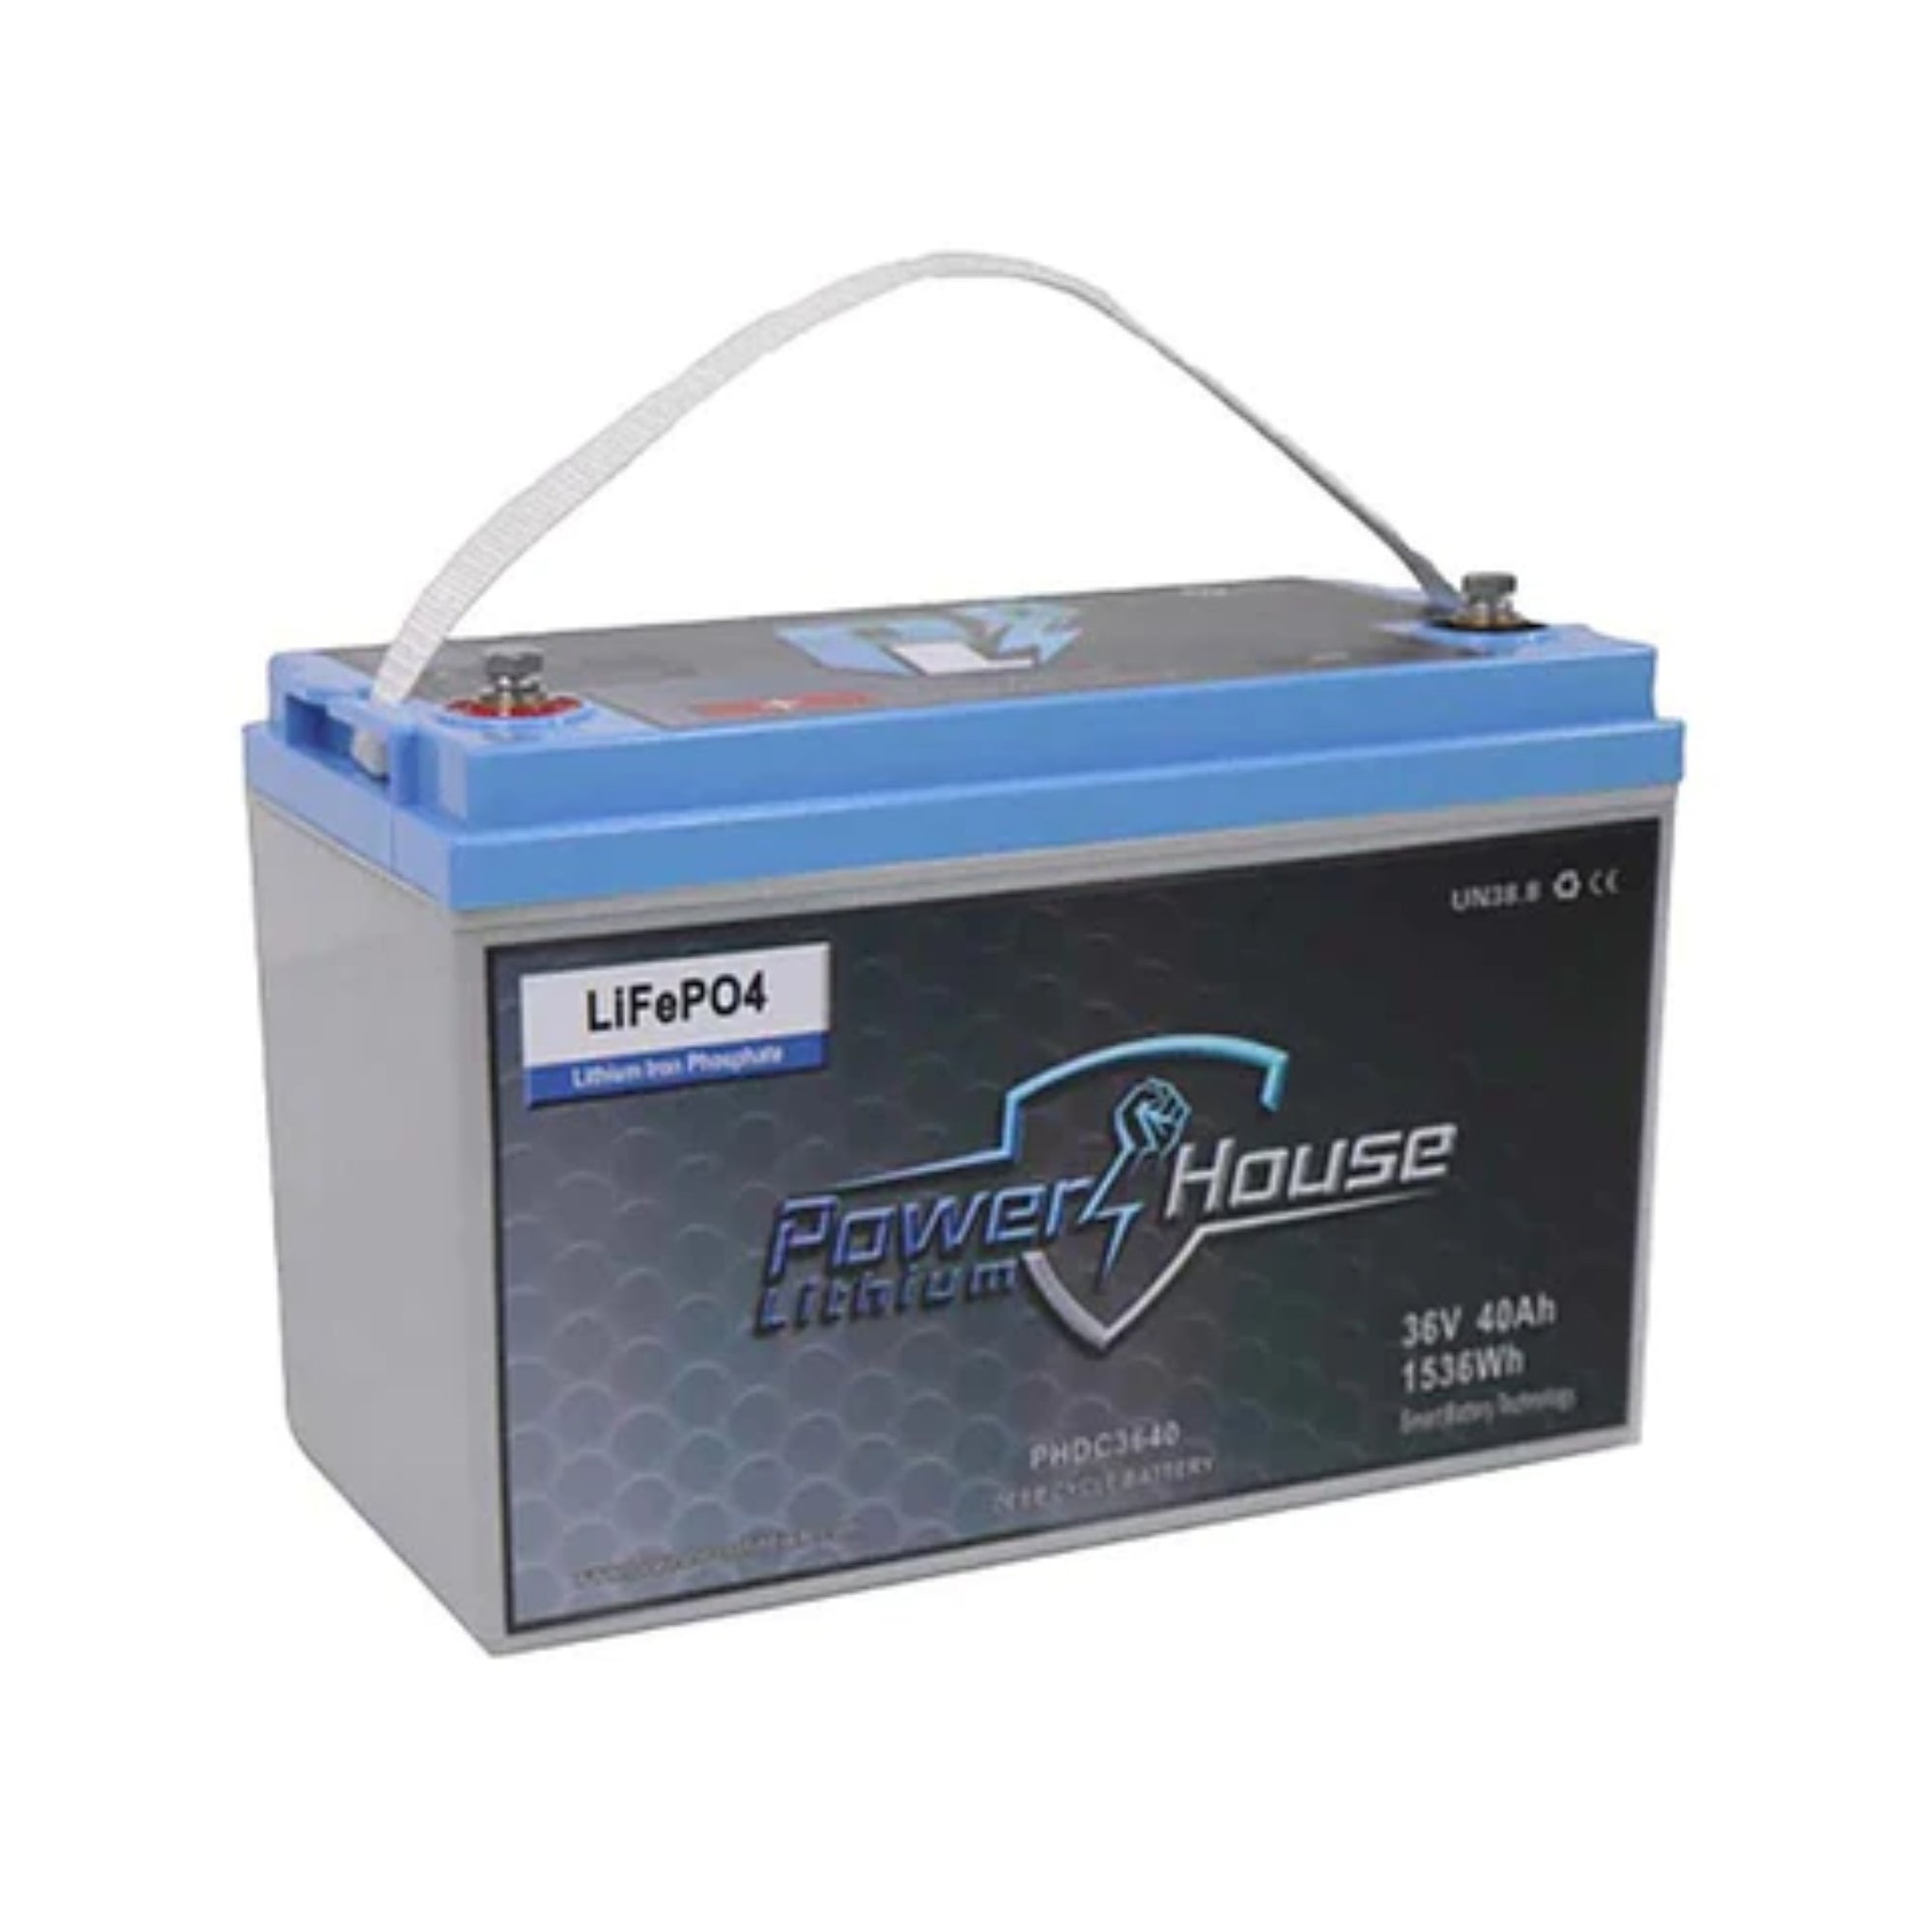 PowerHouse Lithium 36V 40Ah Deep Cycle Battery